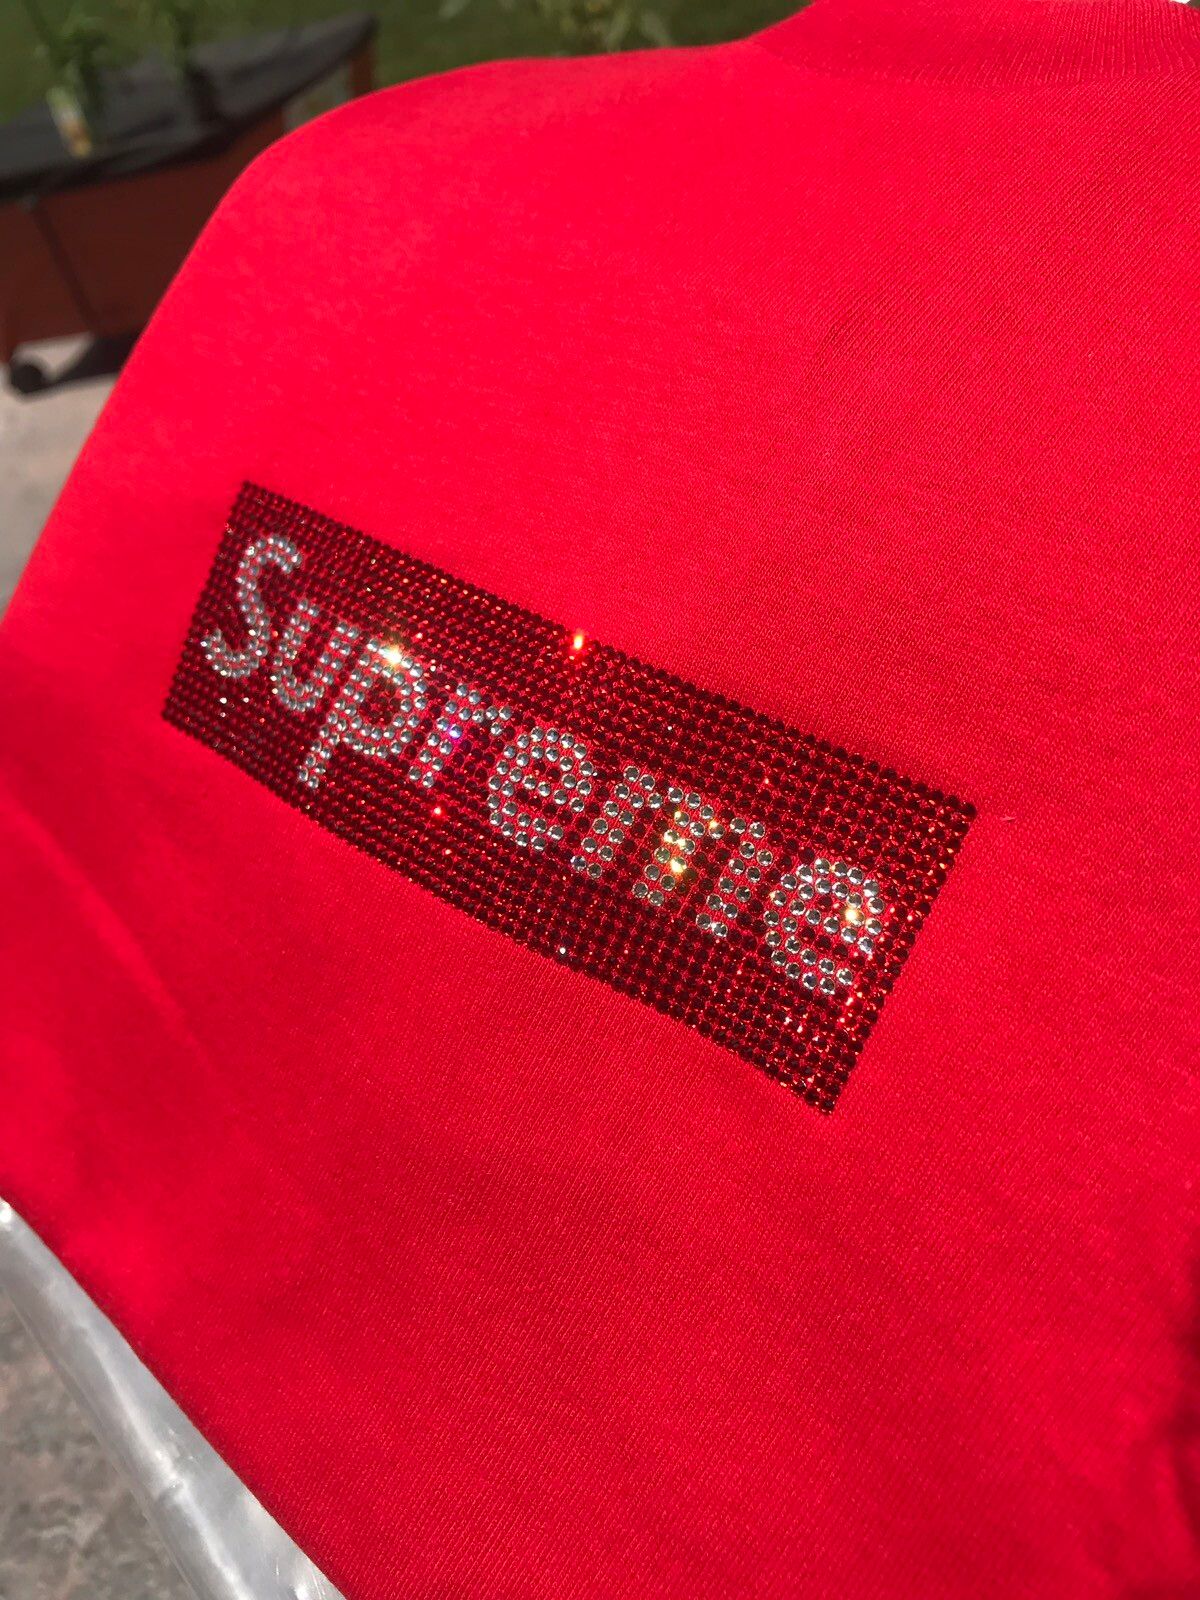 Supreme Supreme Swarovski Box Logo Tee Red | Grailed